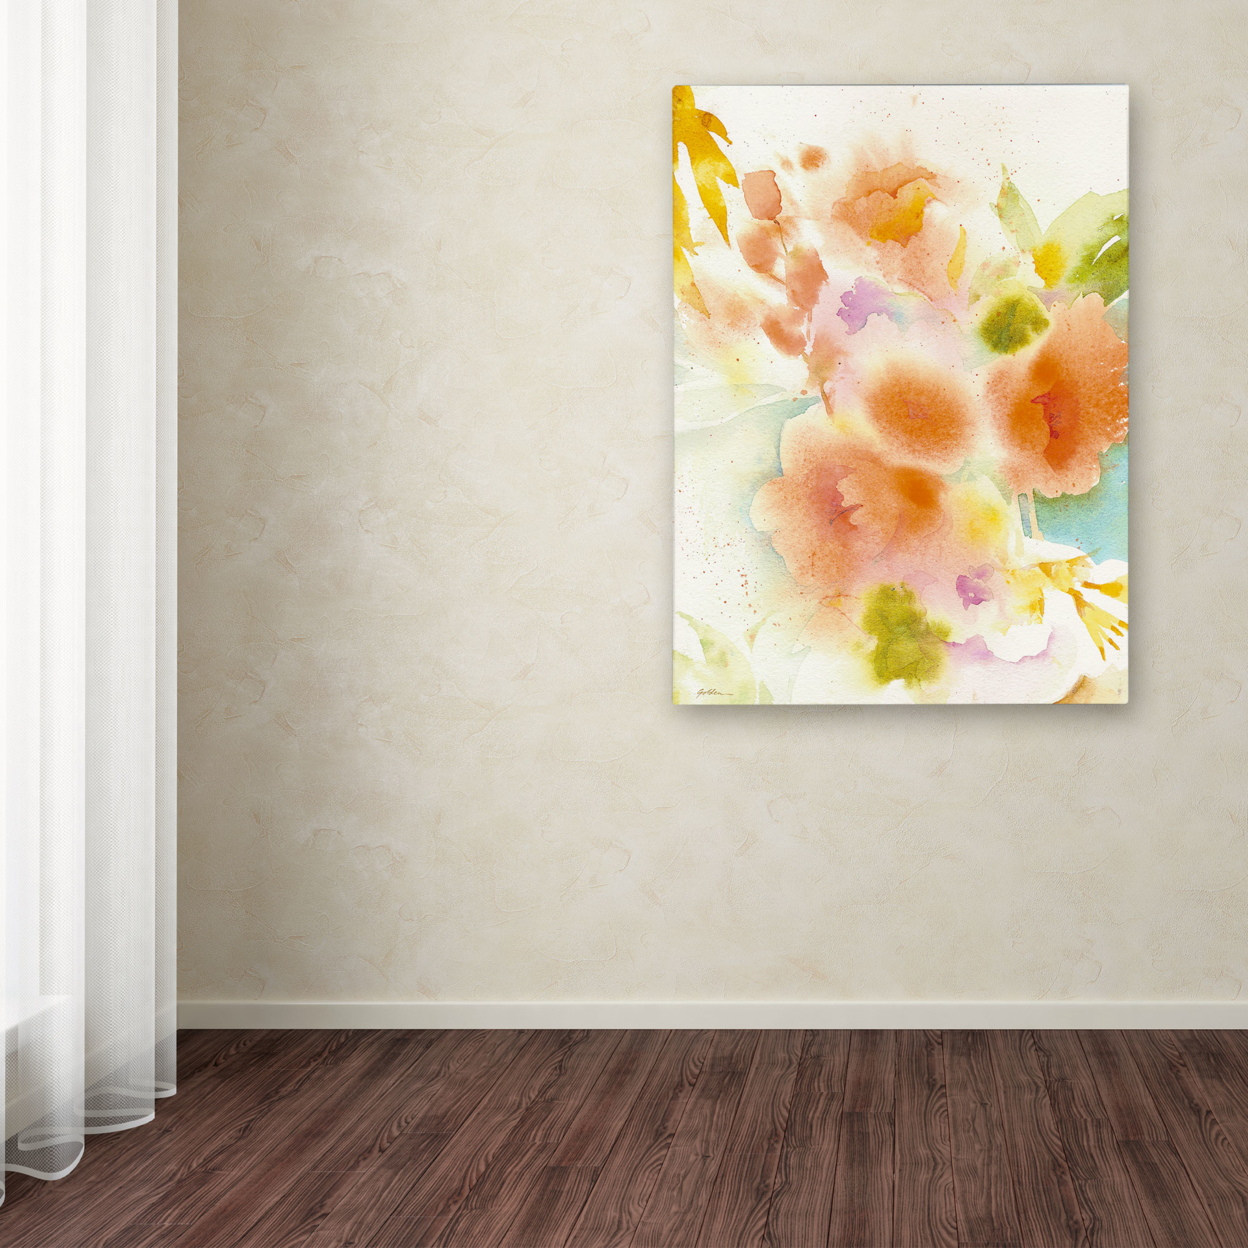 Sheila Golden 'Orange Reflection' Canvas Wall Art 35 X 47 Inches